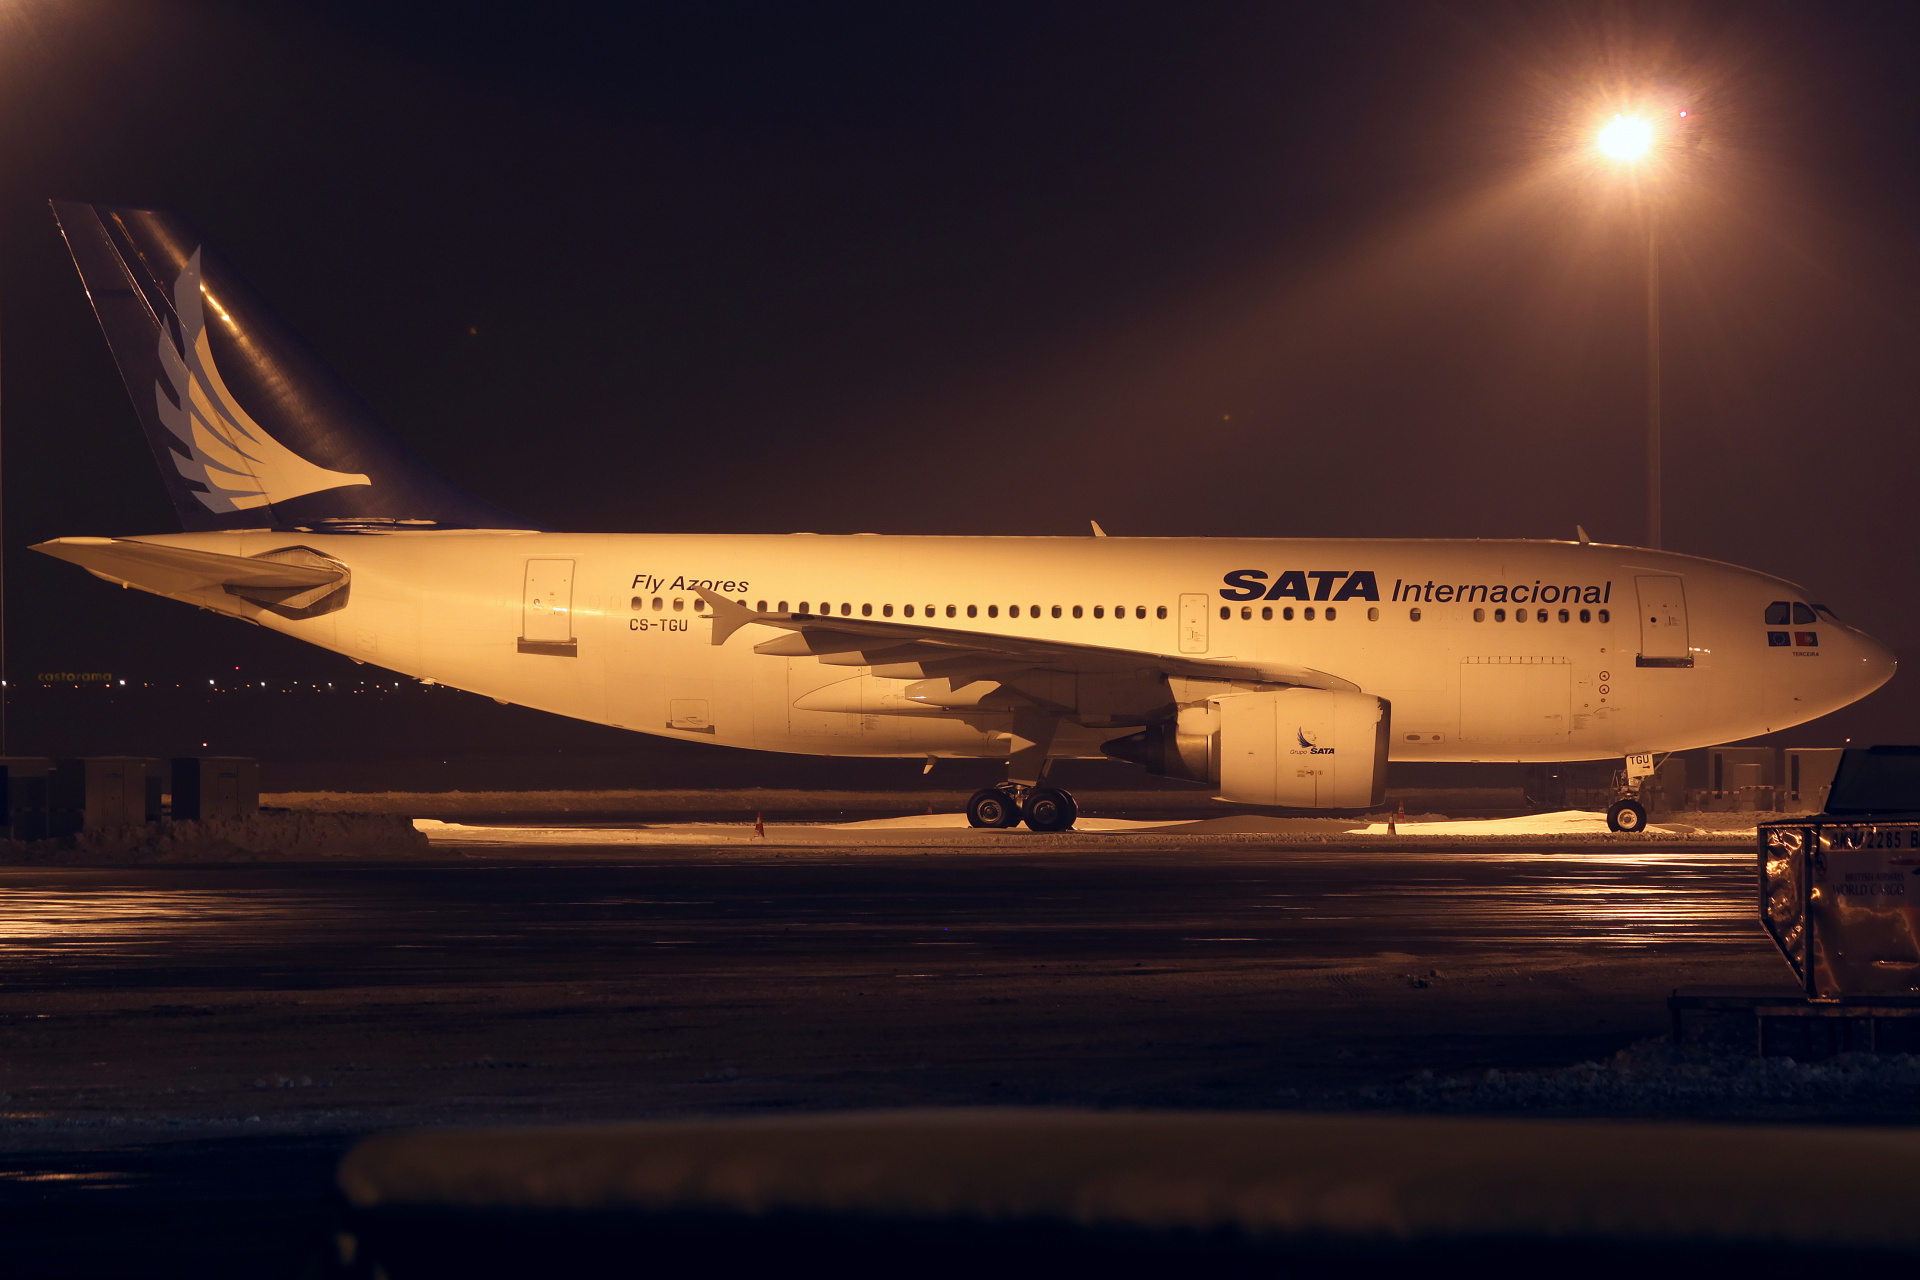 CS-TGU, SATA Internacional (Aircraft » EPWA Spotting » Airbus A310-300)